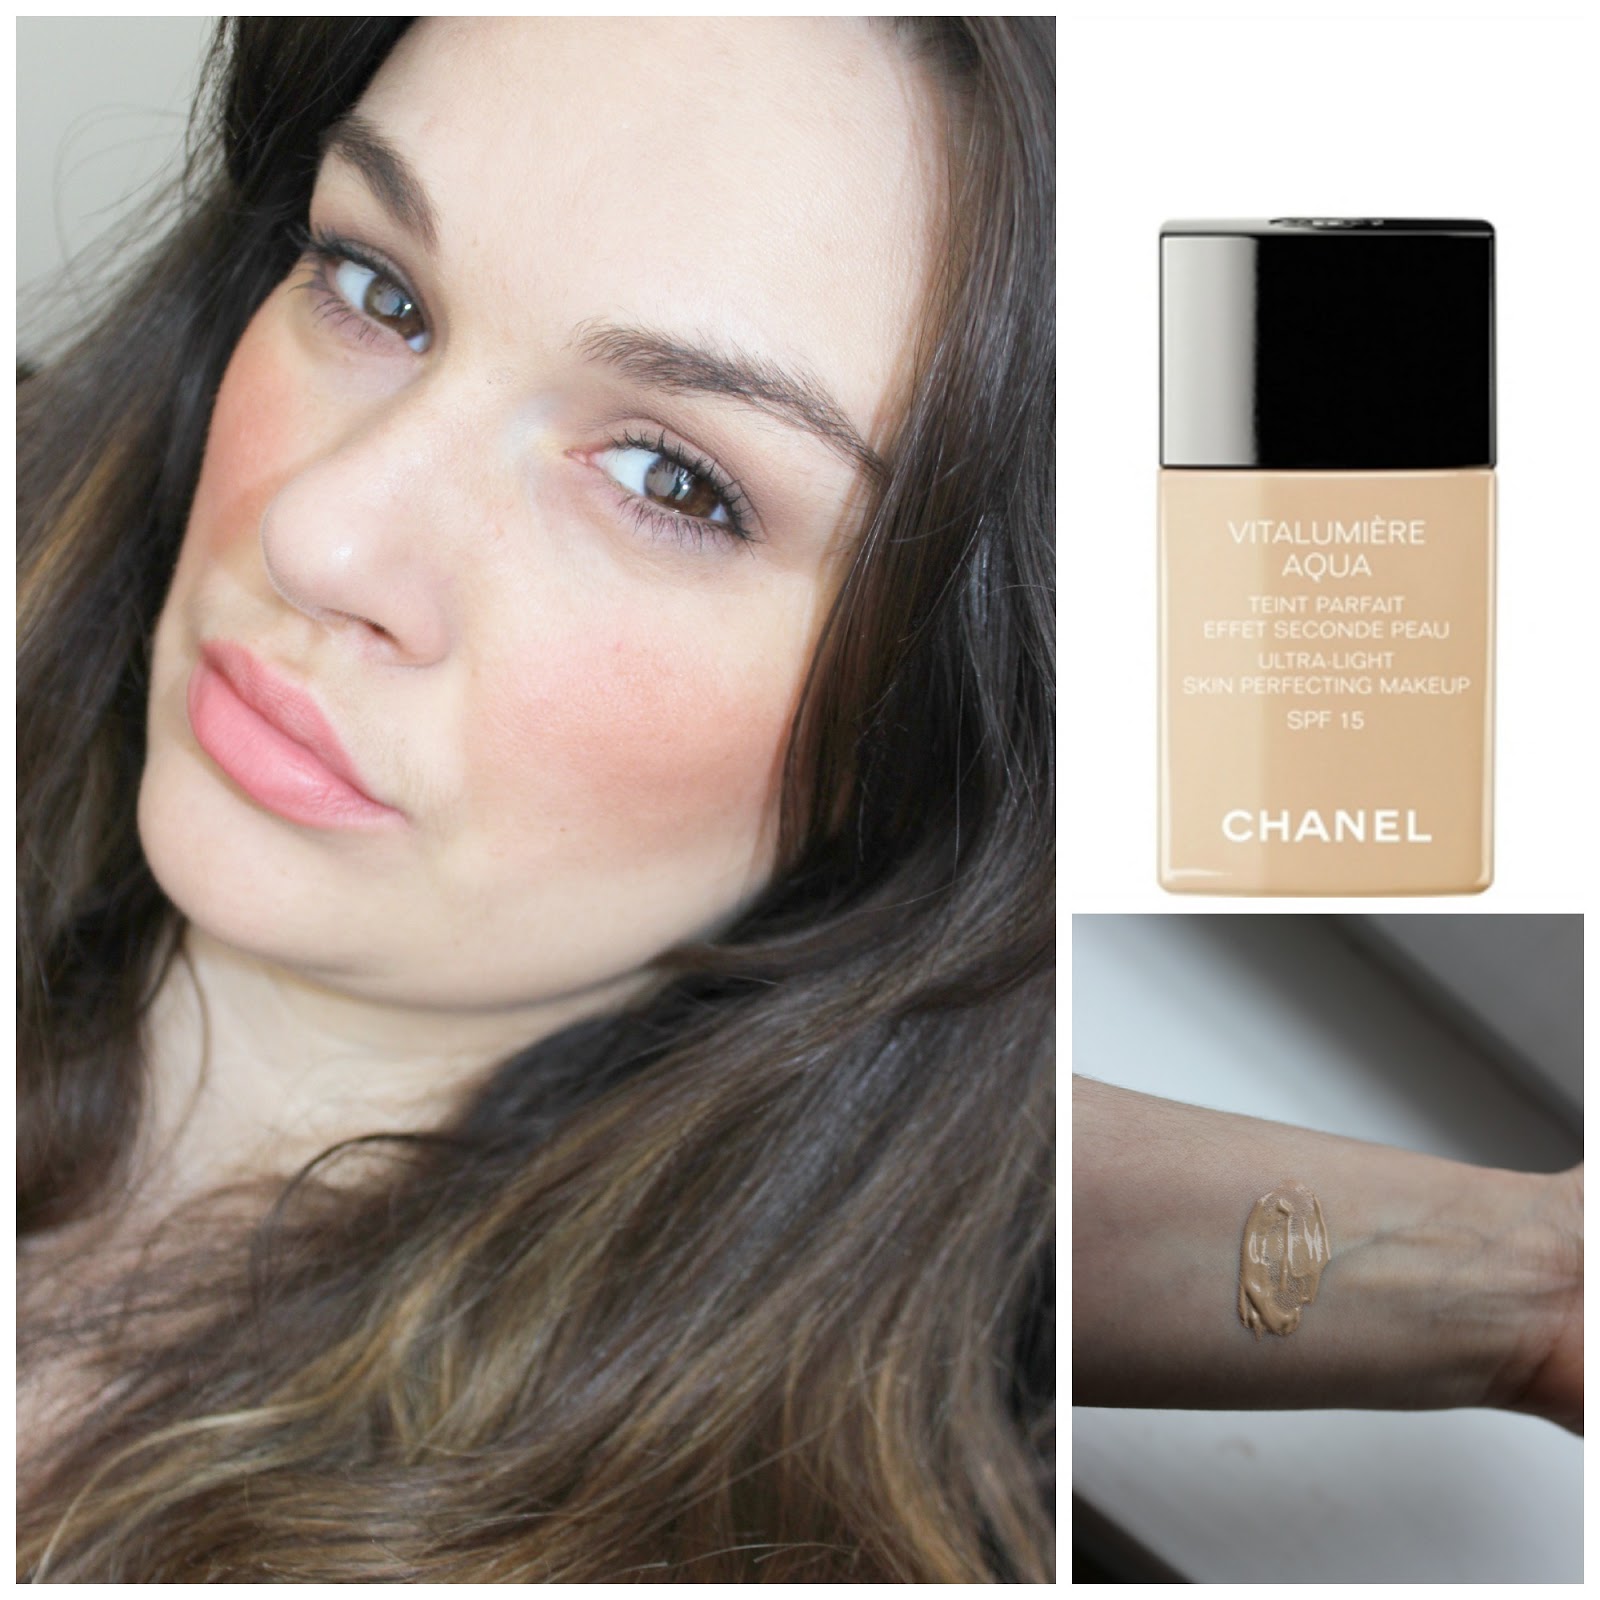 Chanel Vitalumiere Aqua Review & Application on Mature Skin 